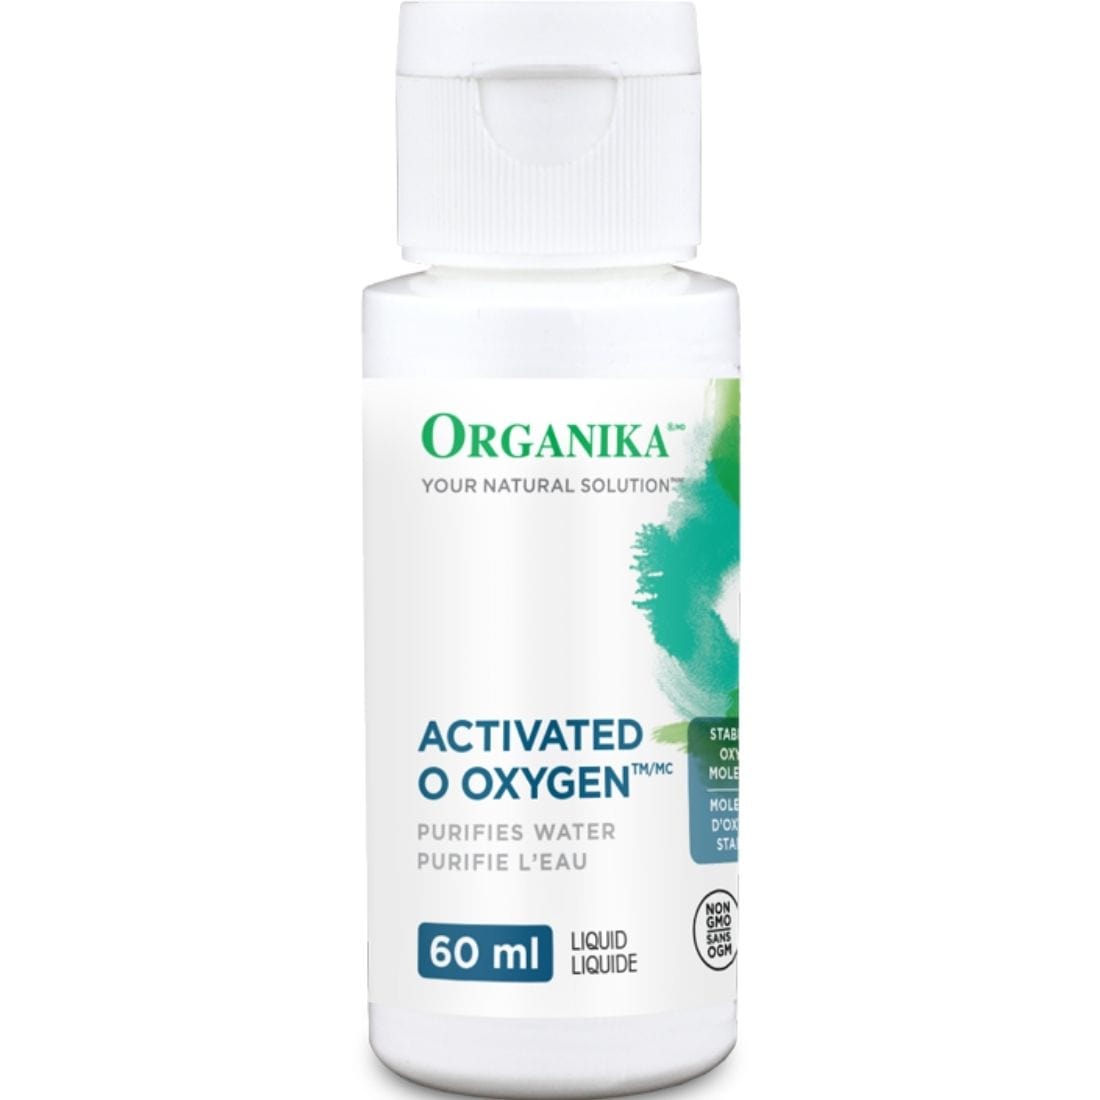 Organika Activated O Oxygen (Aerobic Oxygenator)